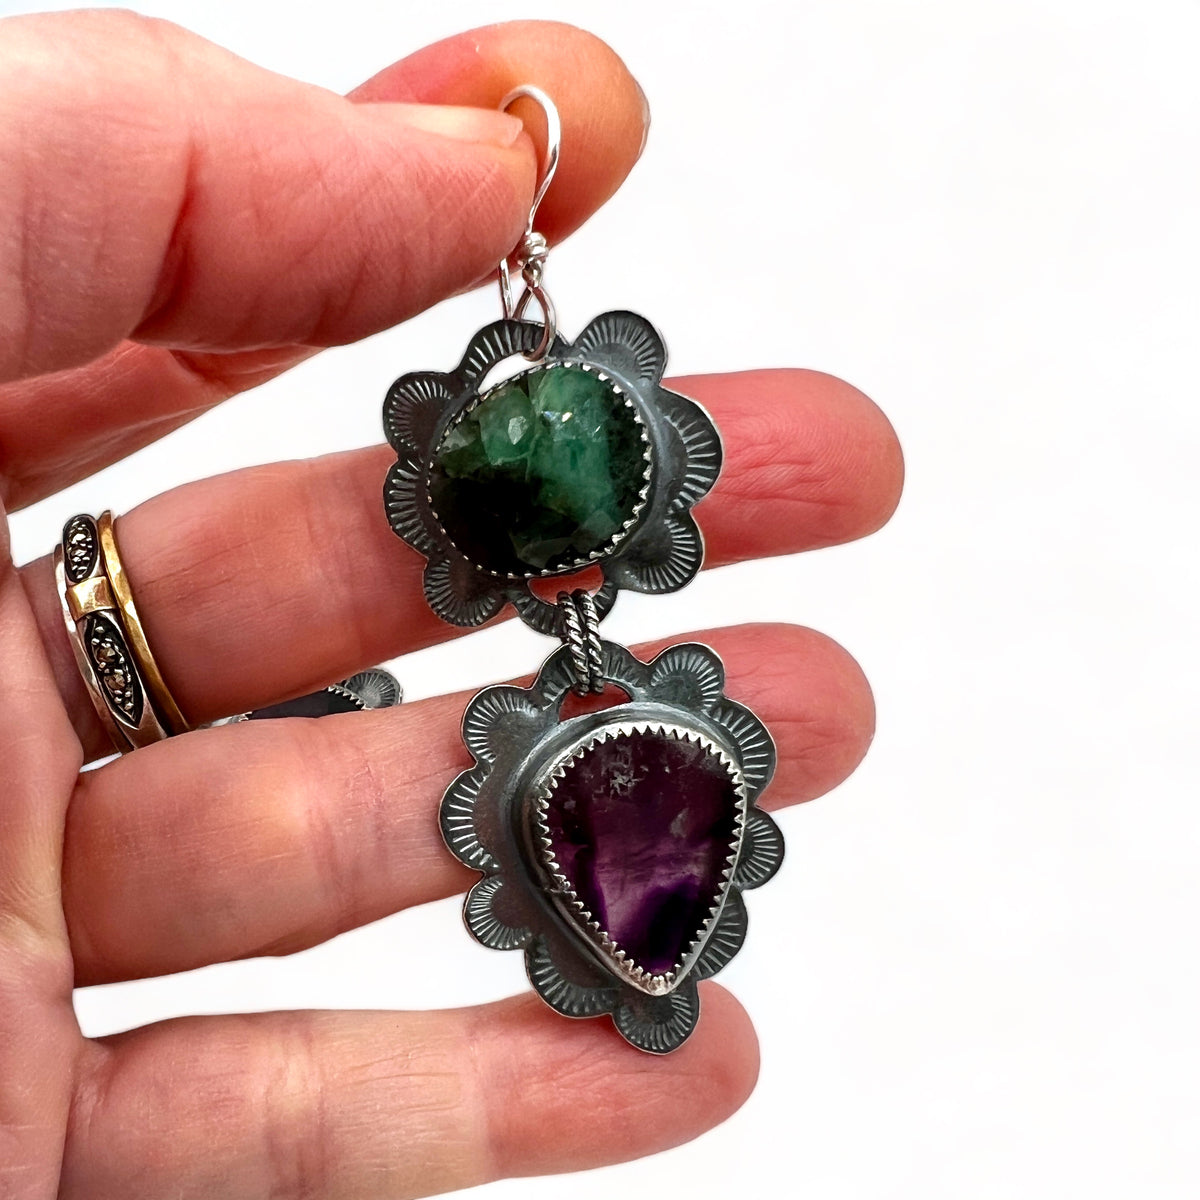 Emerald and Amethyst Earrings *custom* for Annie